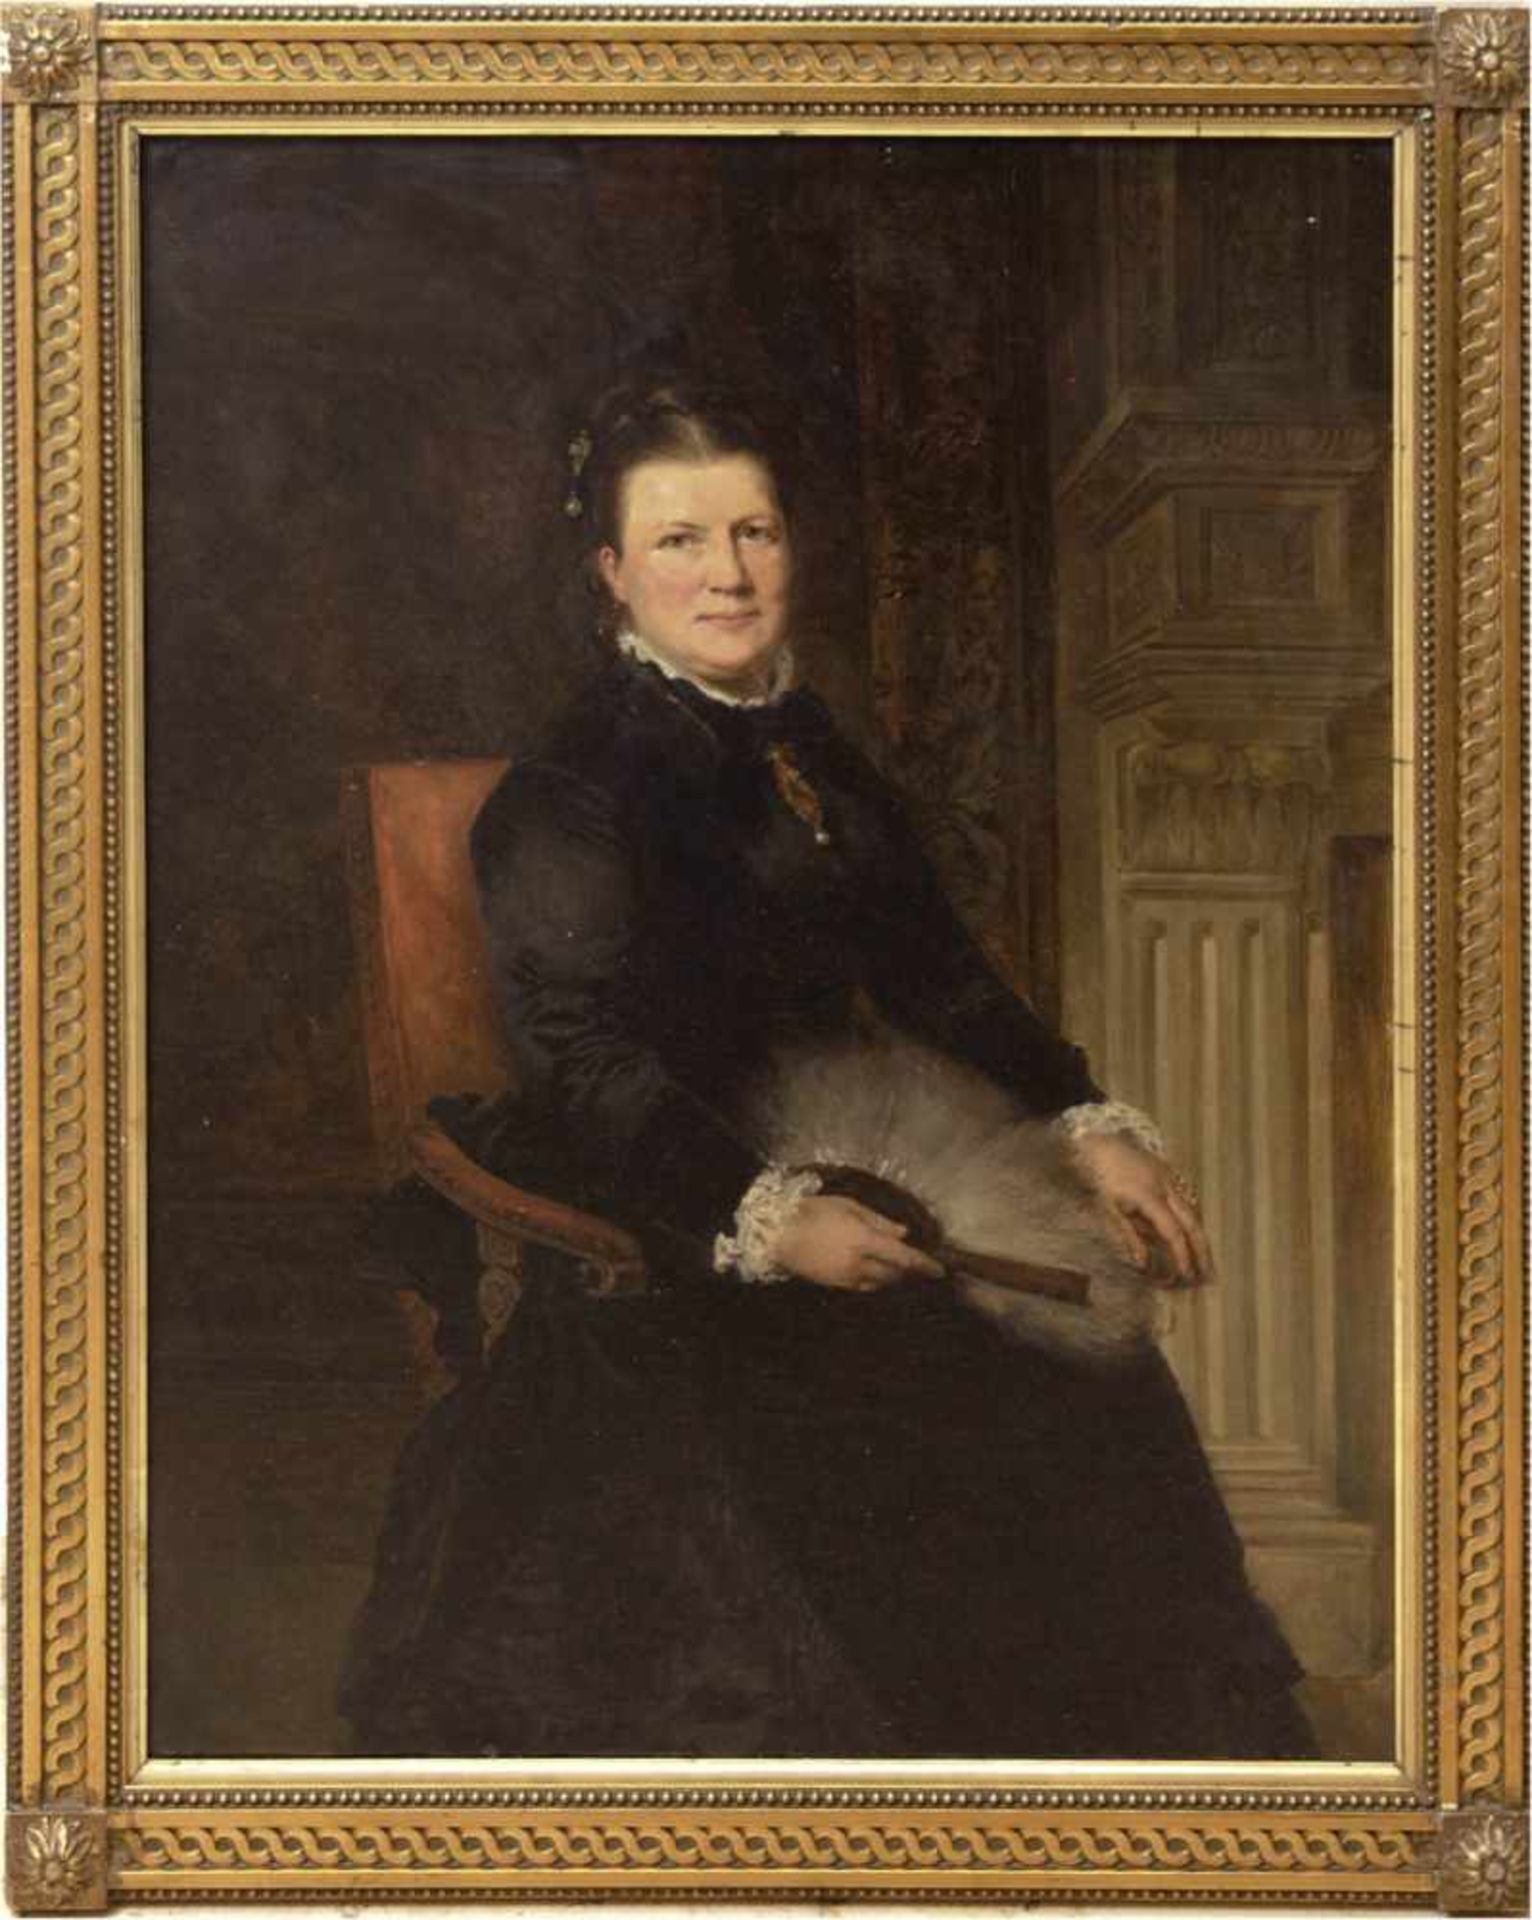 Zajaczkowska, M. nach H. v. Agleli "Porträt der Marie Luise Vietor", Öl/Lw., signiert unddatiert